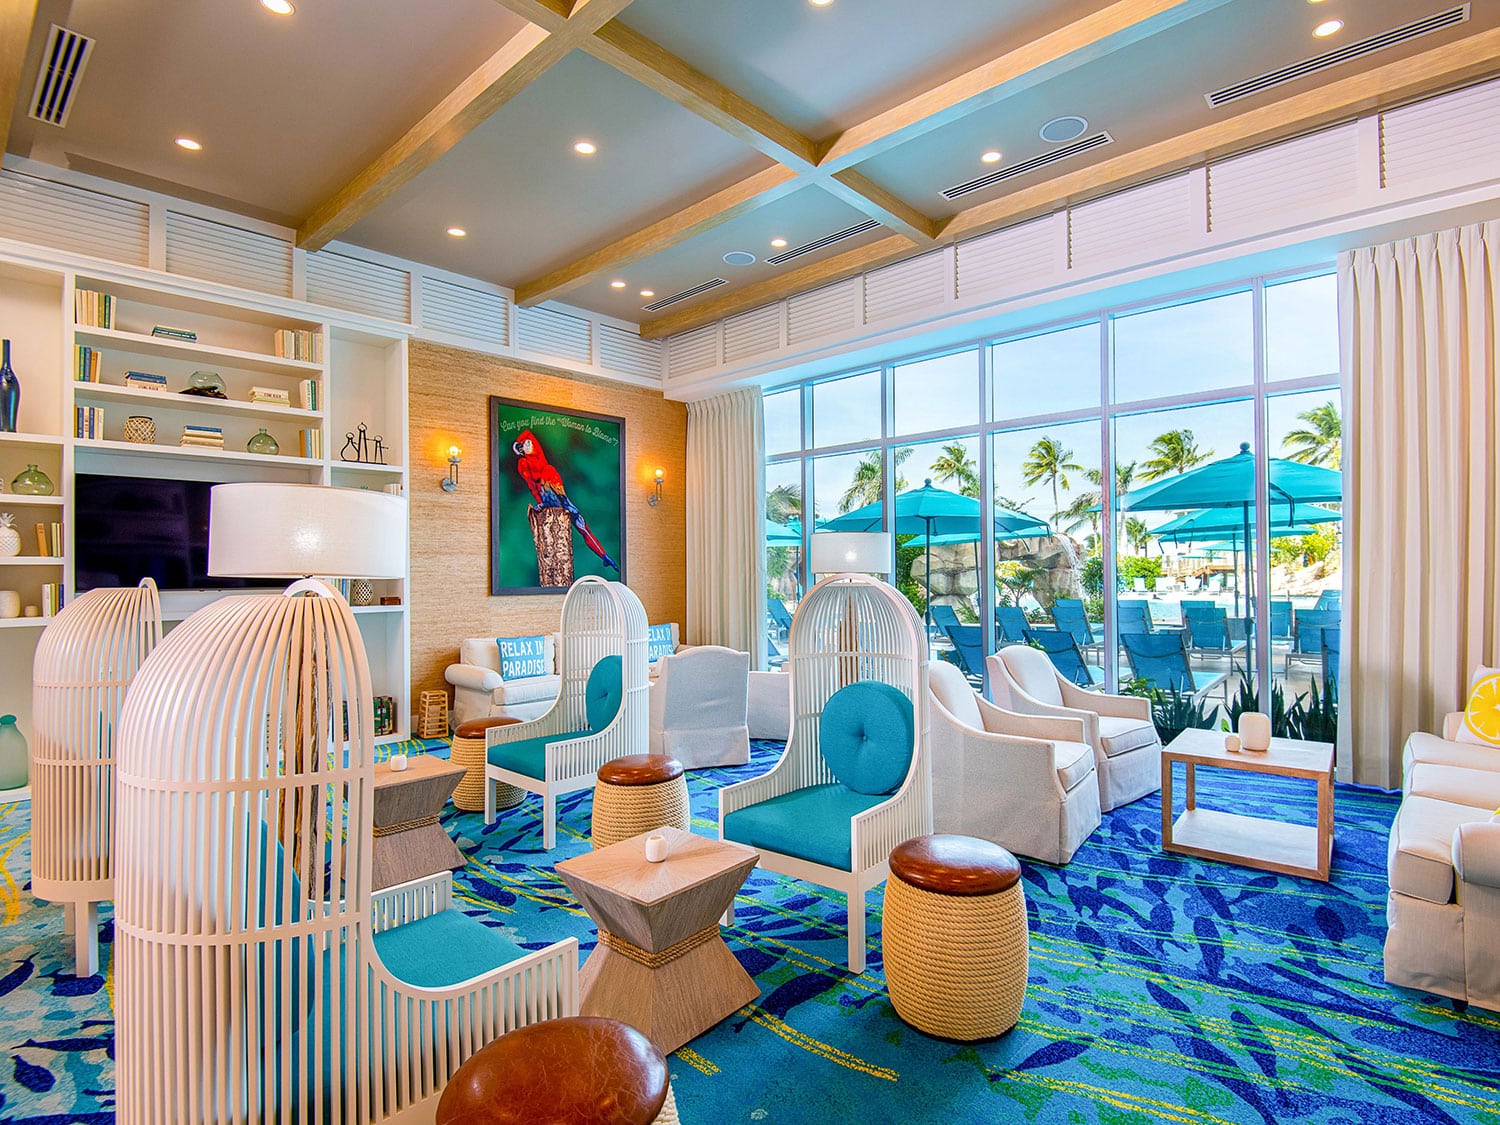 The interior lounge area at Margaritaville Beach Resort Nassau in the Bahamas.